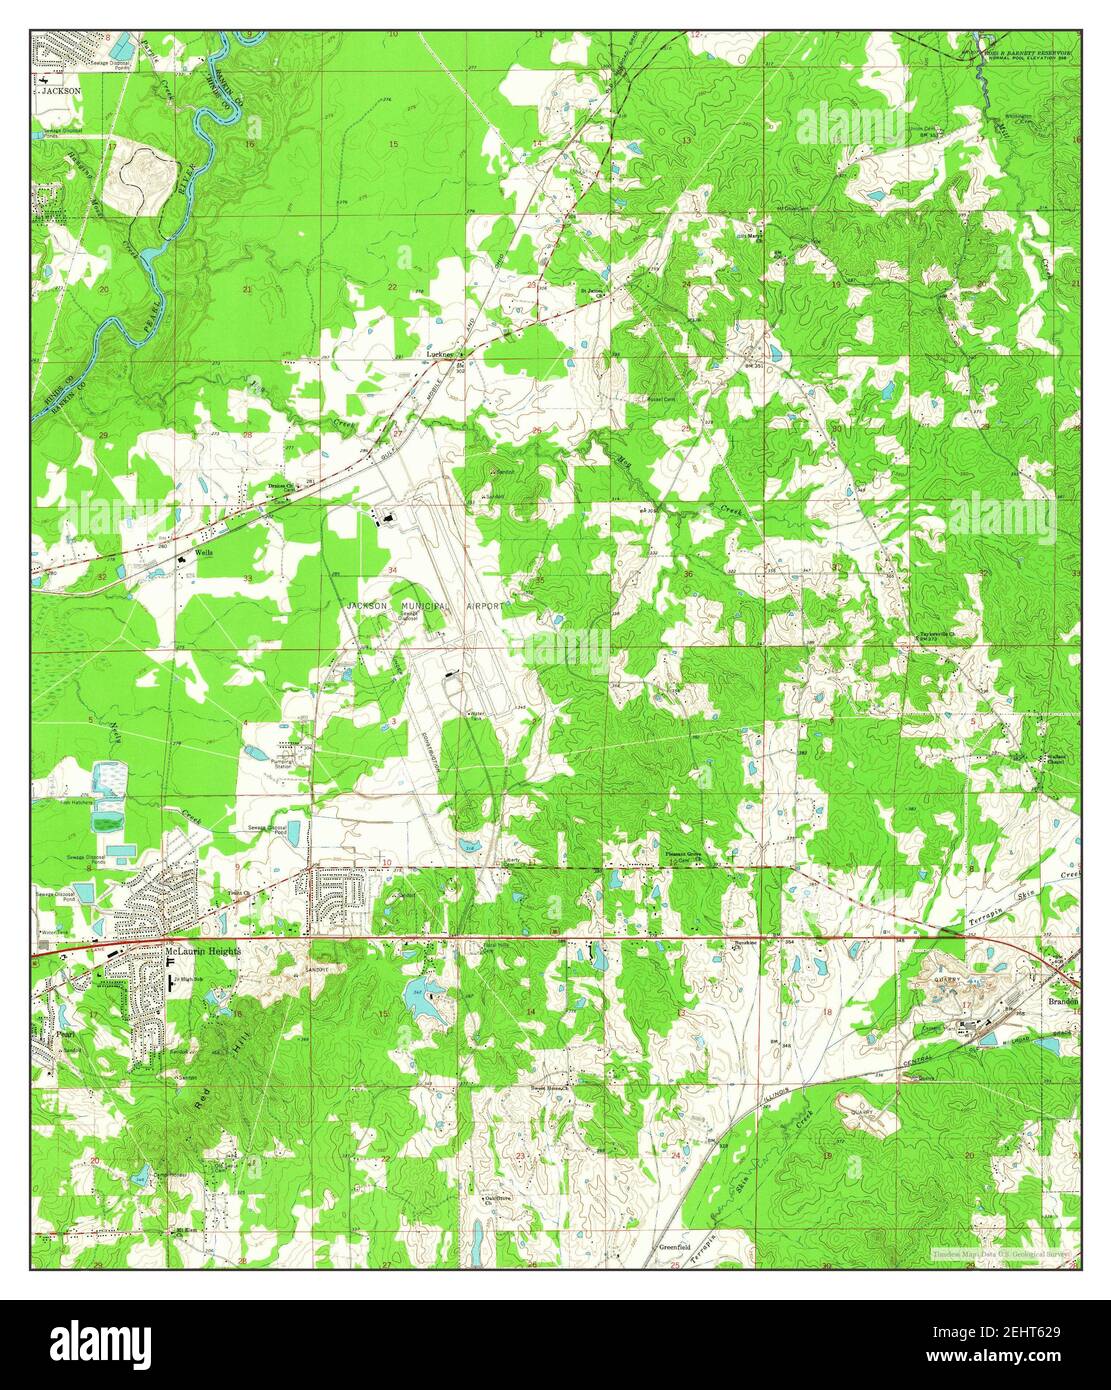 Jackson SE, Mississippi, map 1963, 1:24000, United States of America by Timeless Maps, data U.S. Geological Survey Stock Photo